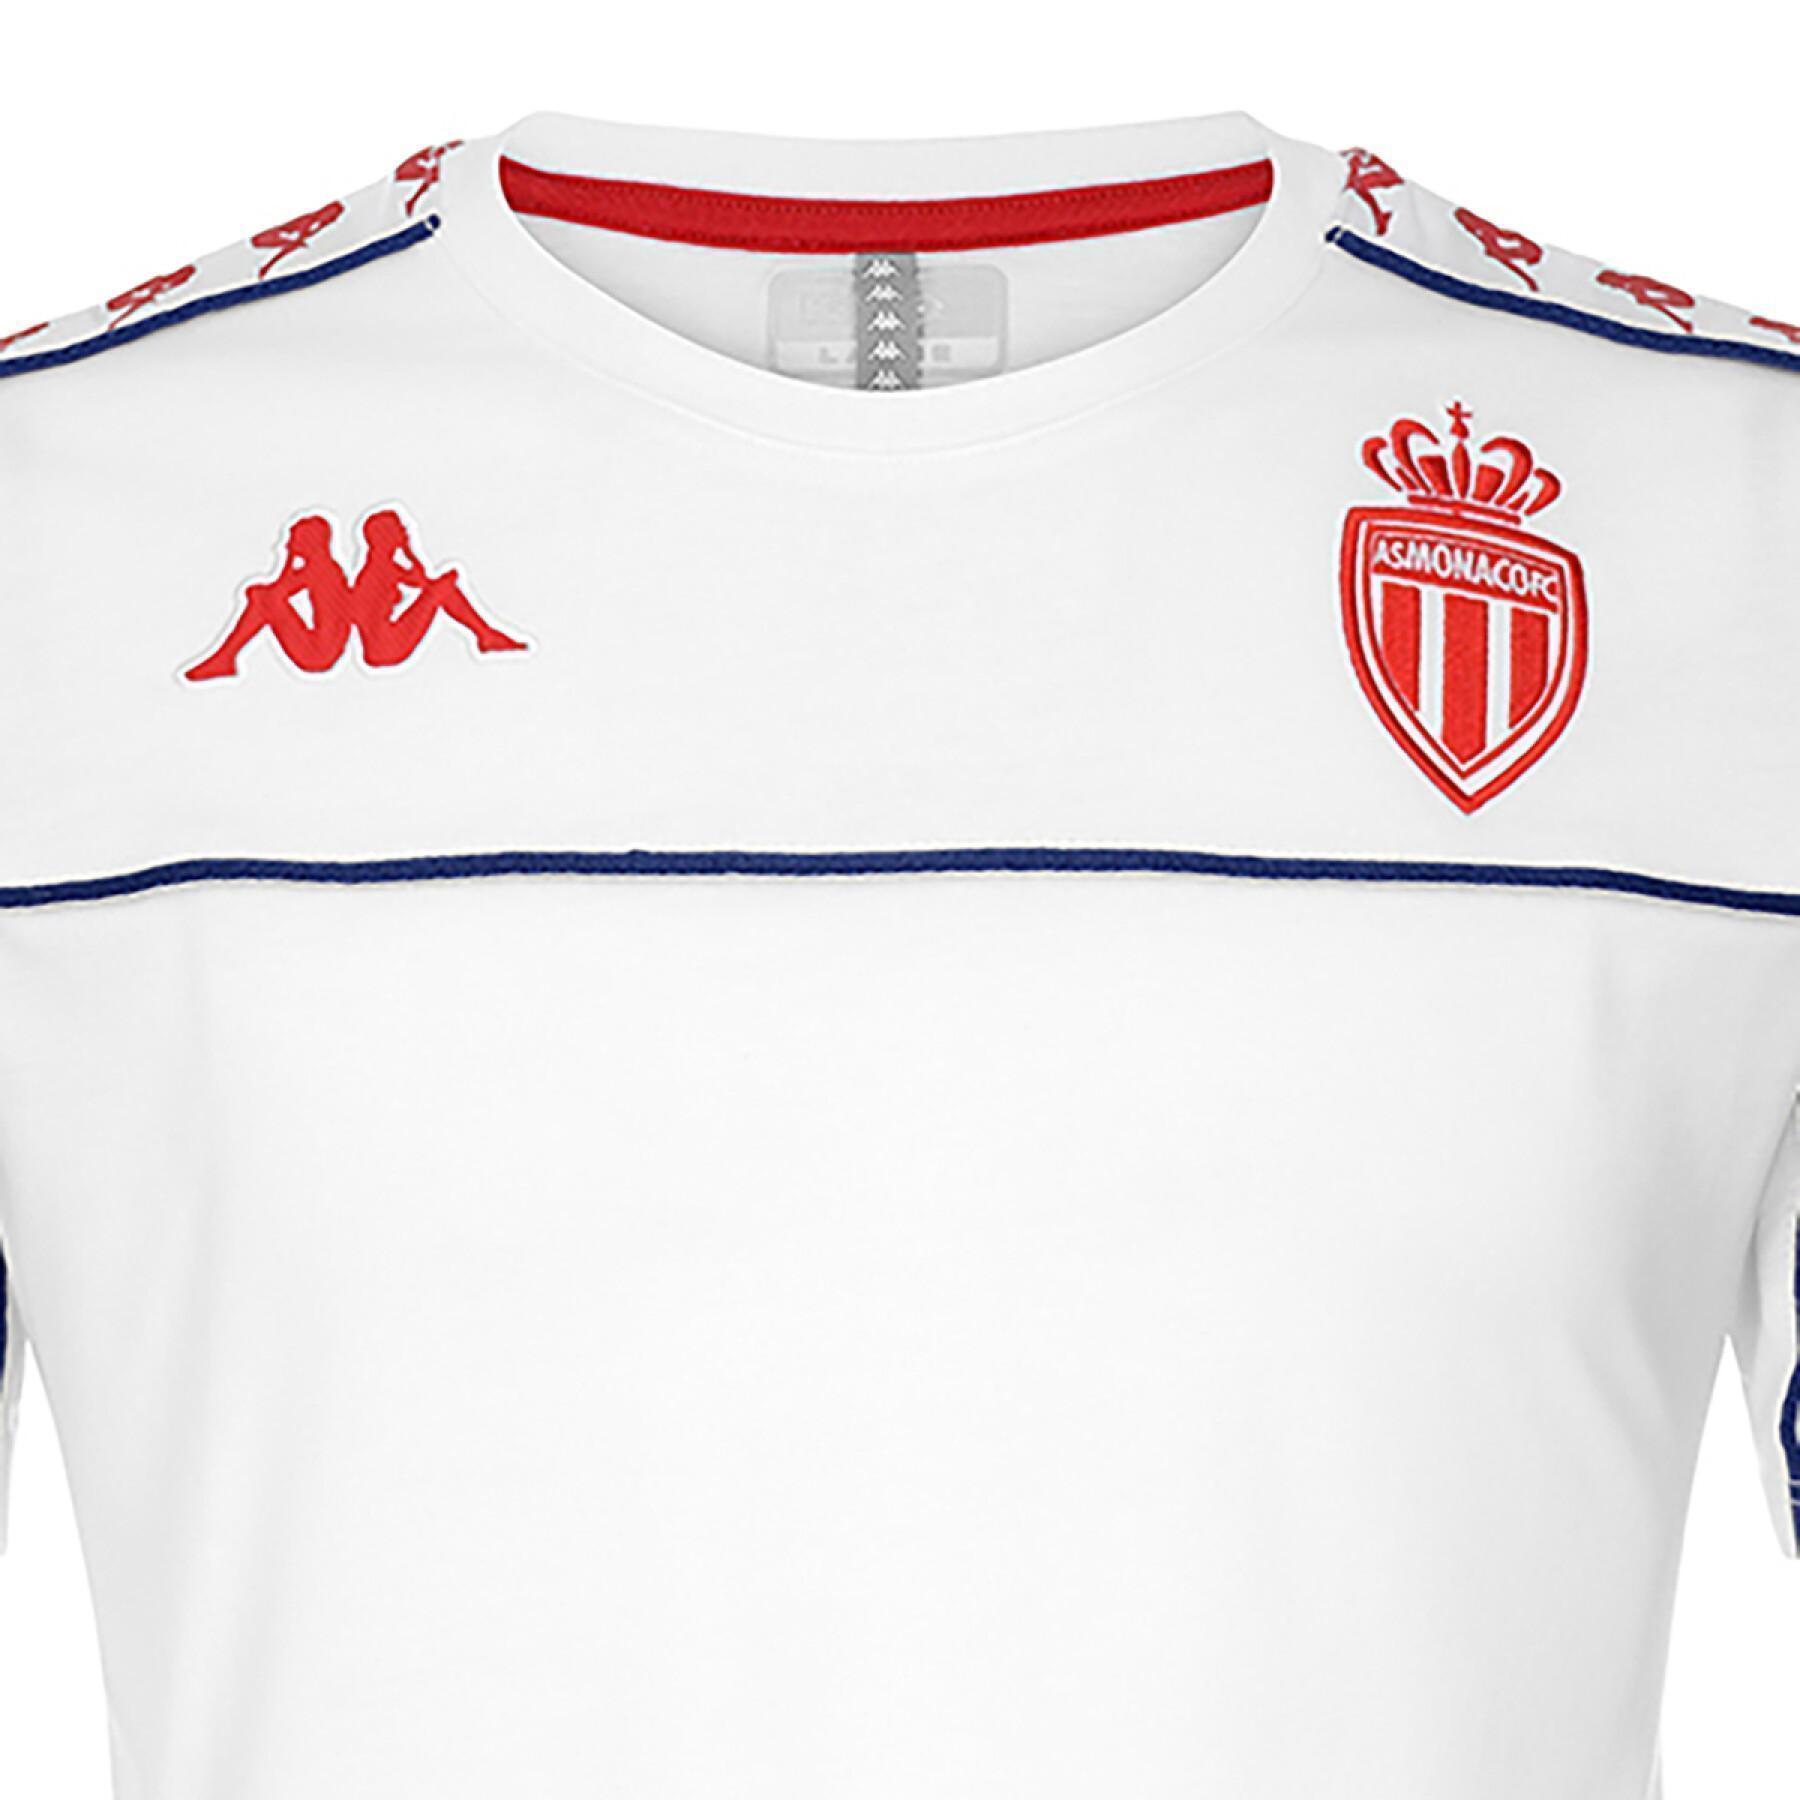 Koszulka dziecięca AS Monaco 2021/22 222 banda arari slim